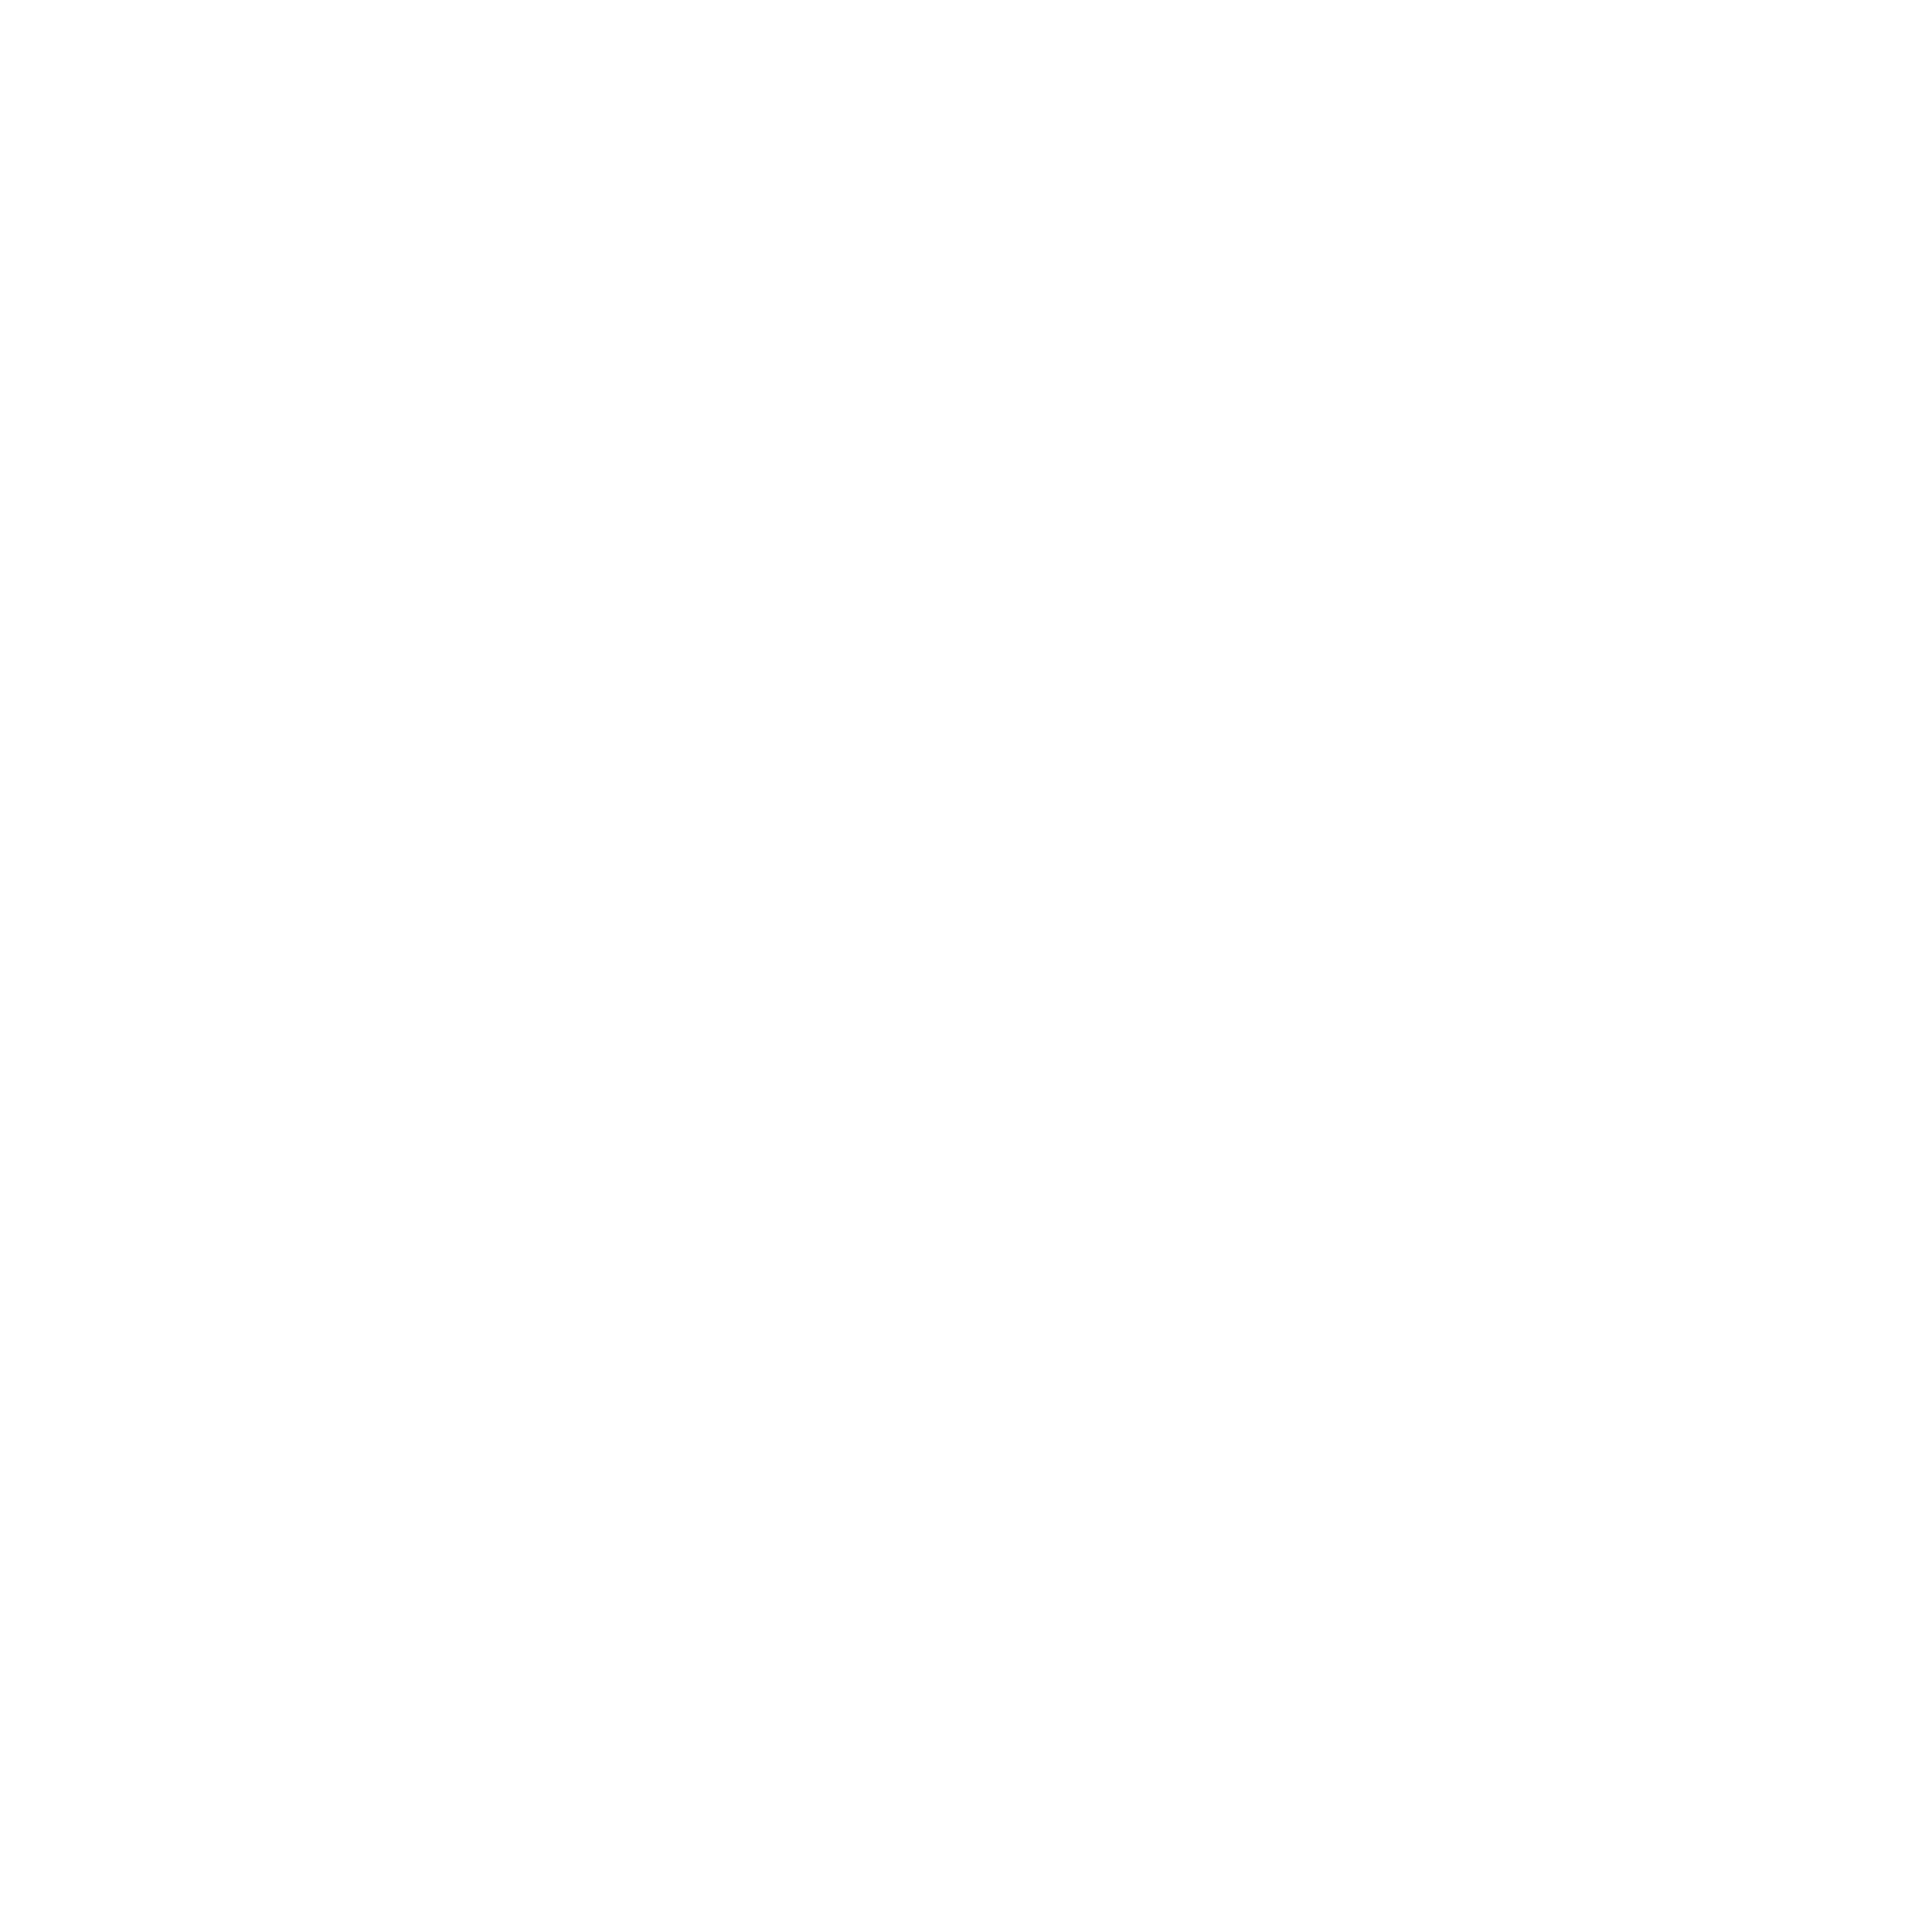 The Flying Canoe Pub